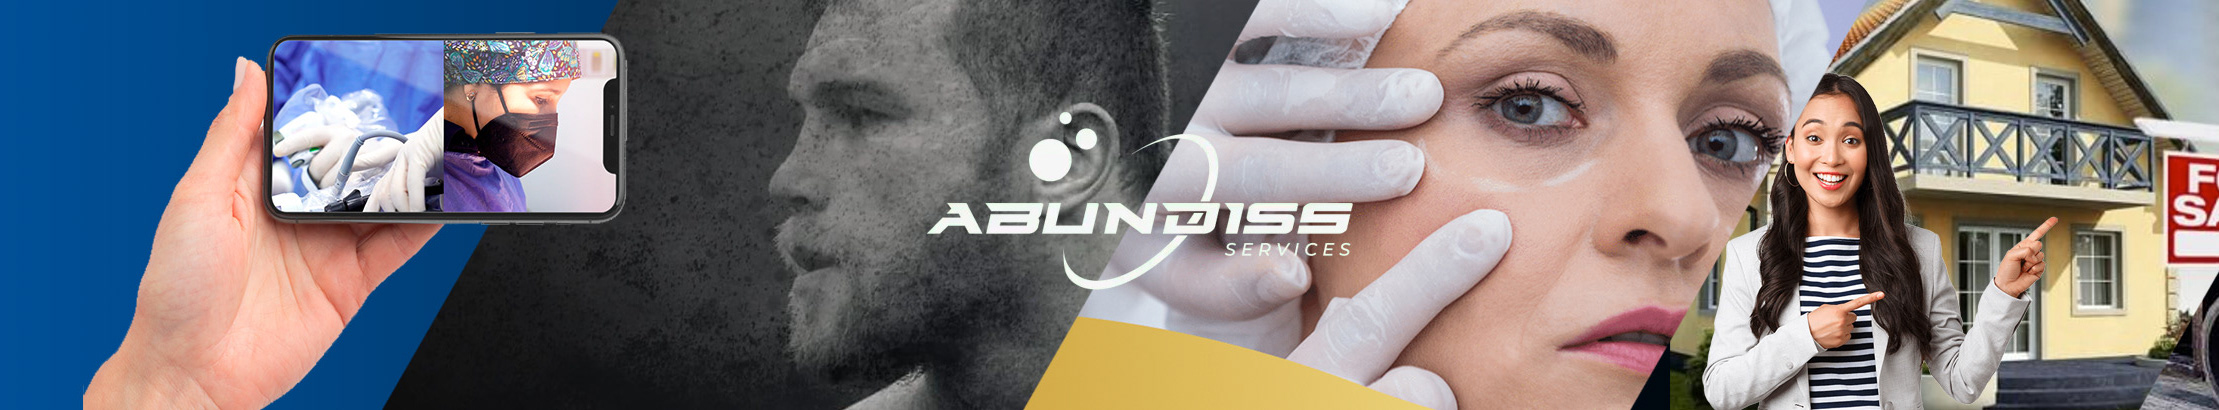 Abundiss Services's profile banner